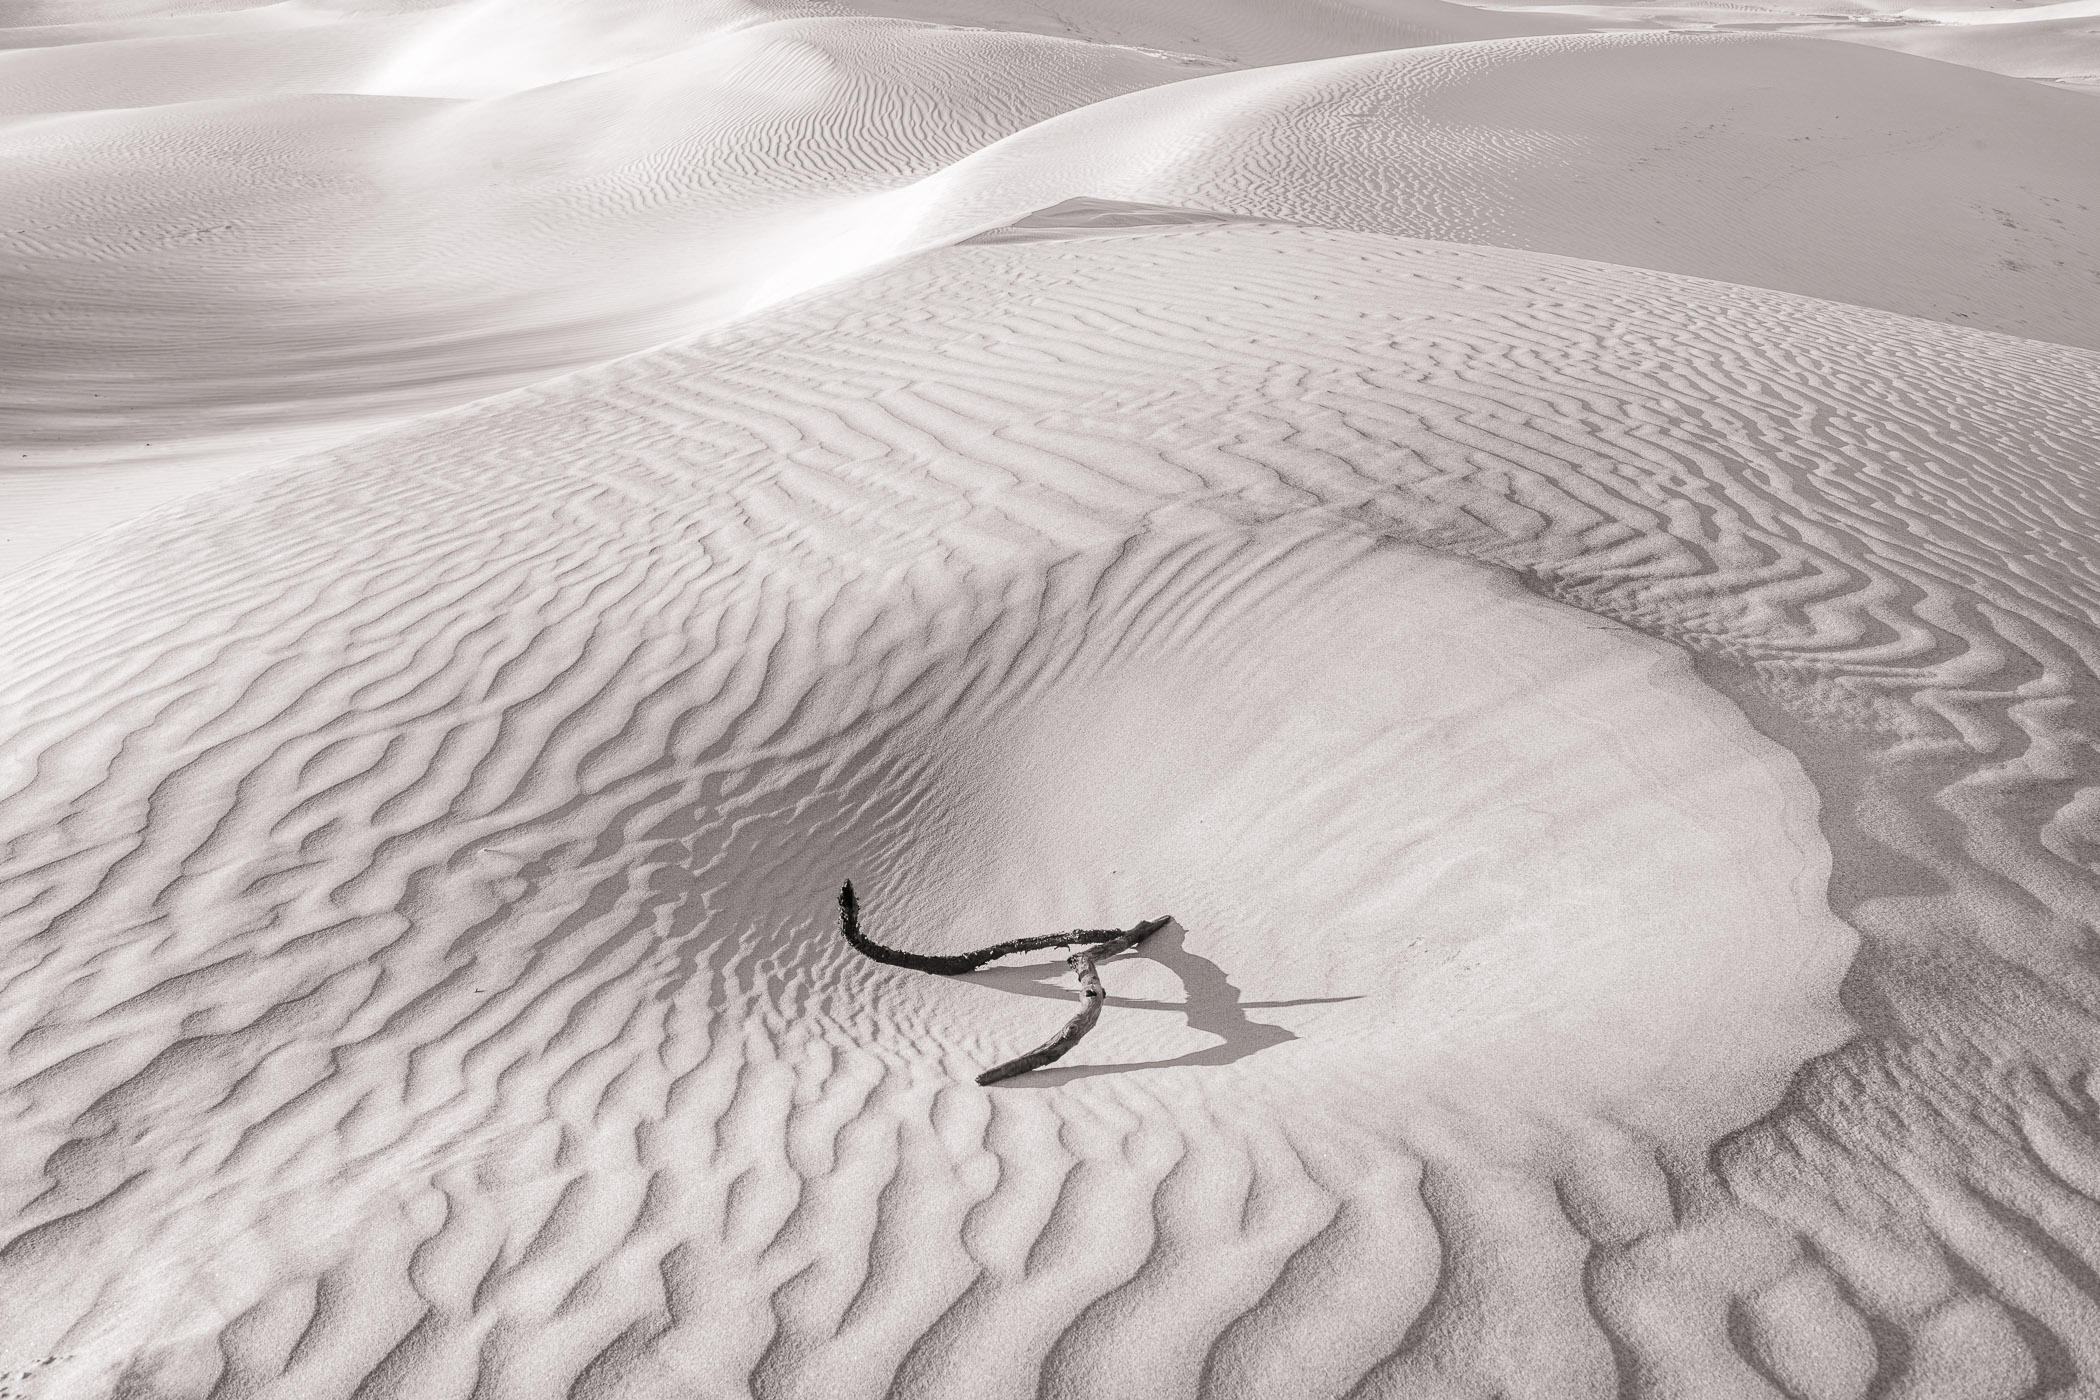 Dune Stick, Death Valley National Park